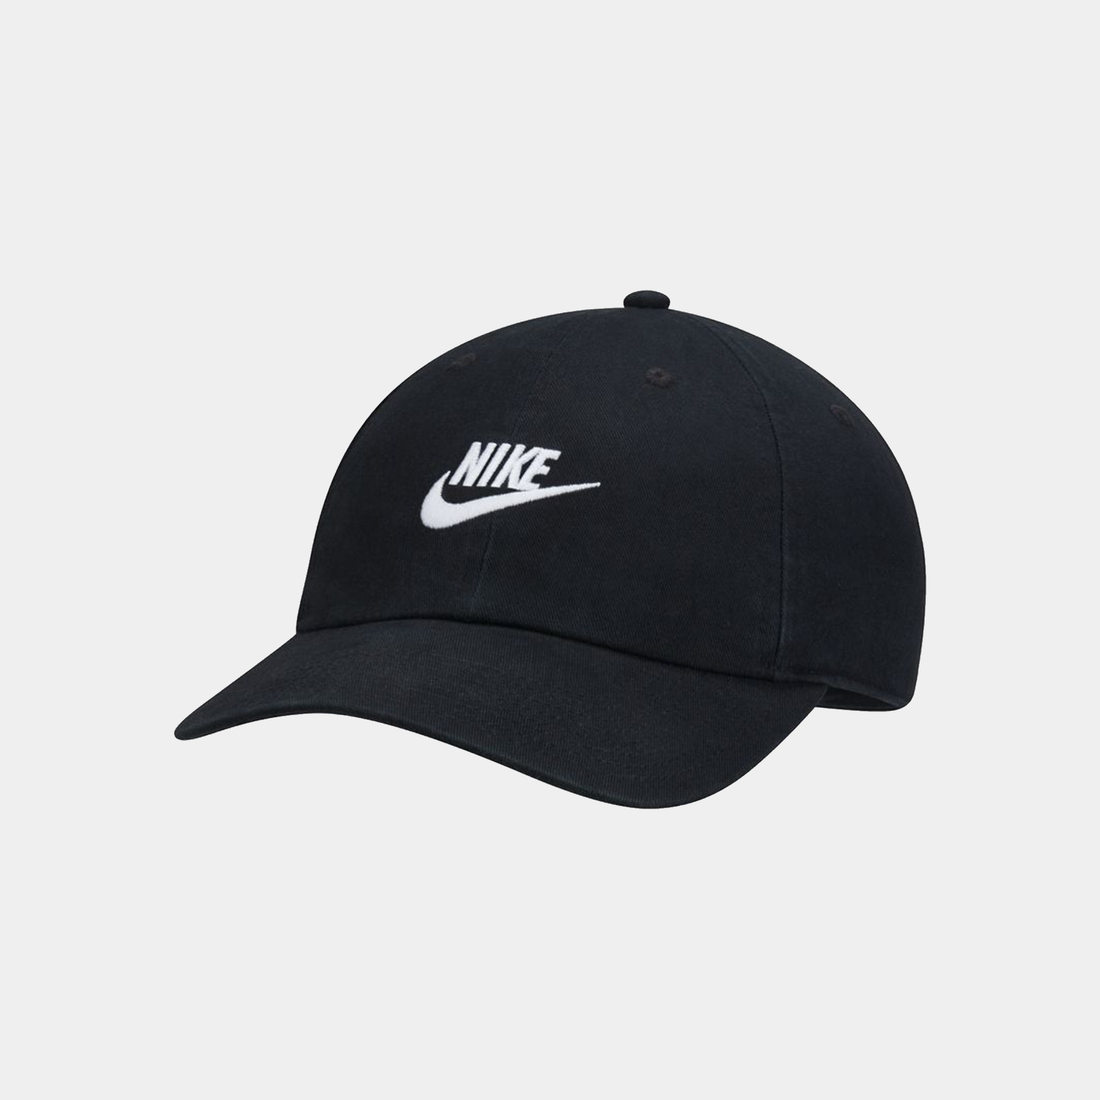 casquette Nike noire broderie